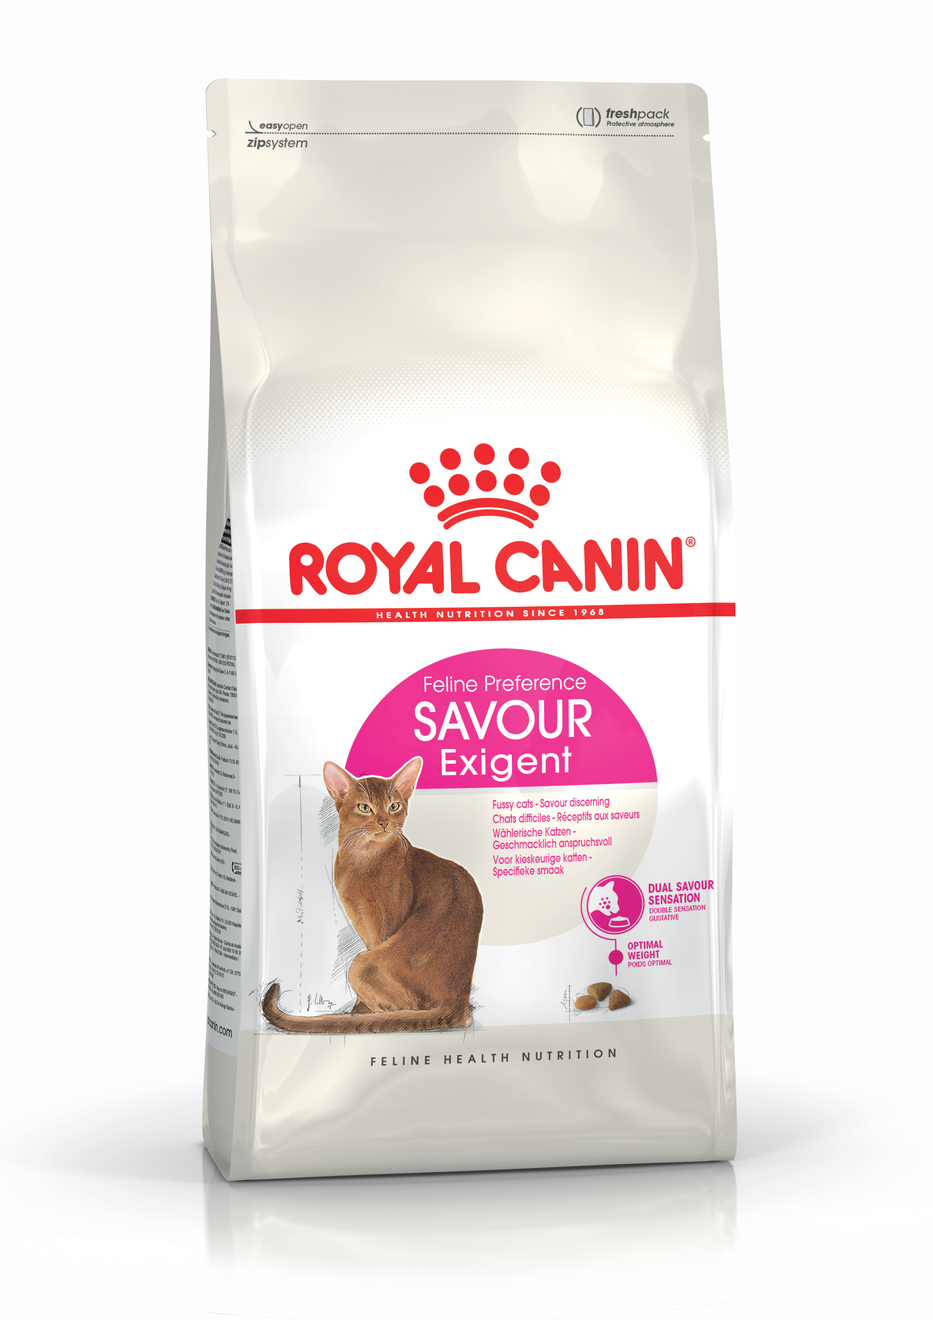 ROYAL CANIN Savour Exigent Adult Cat Food